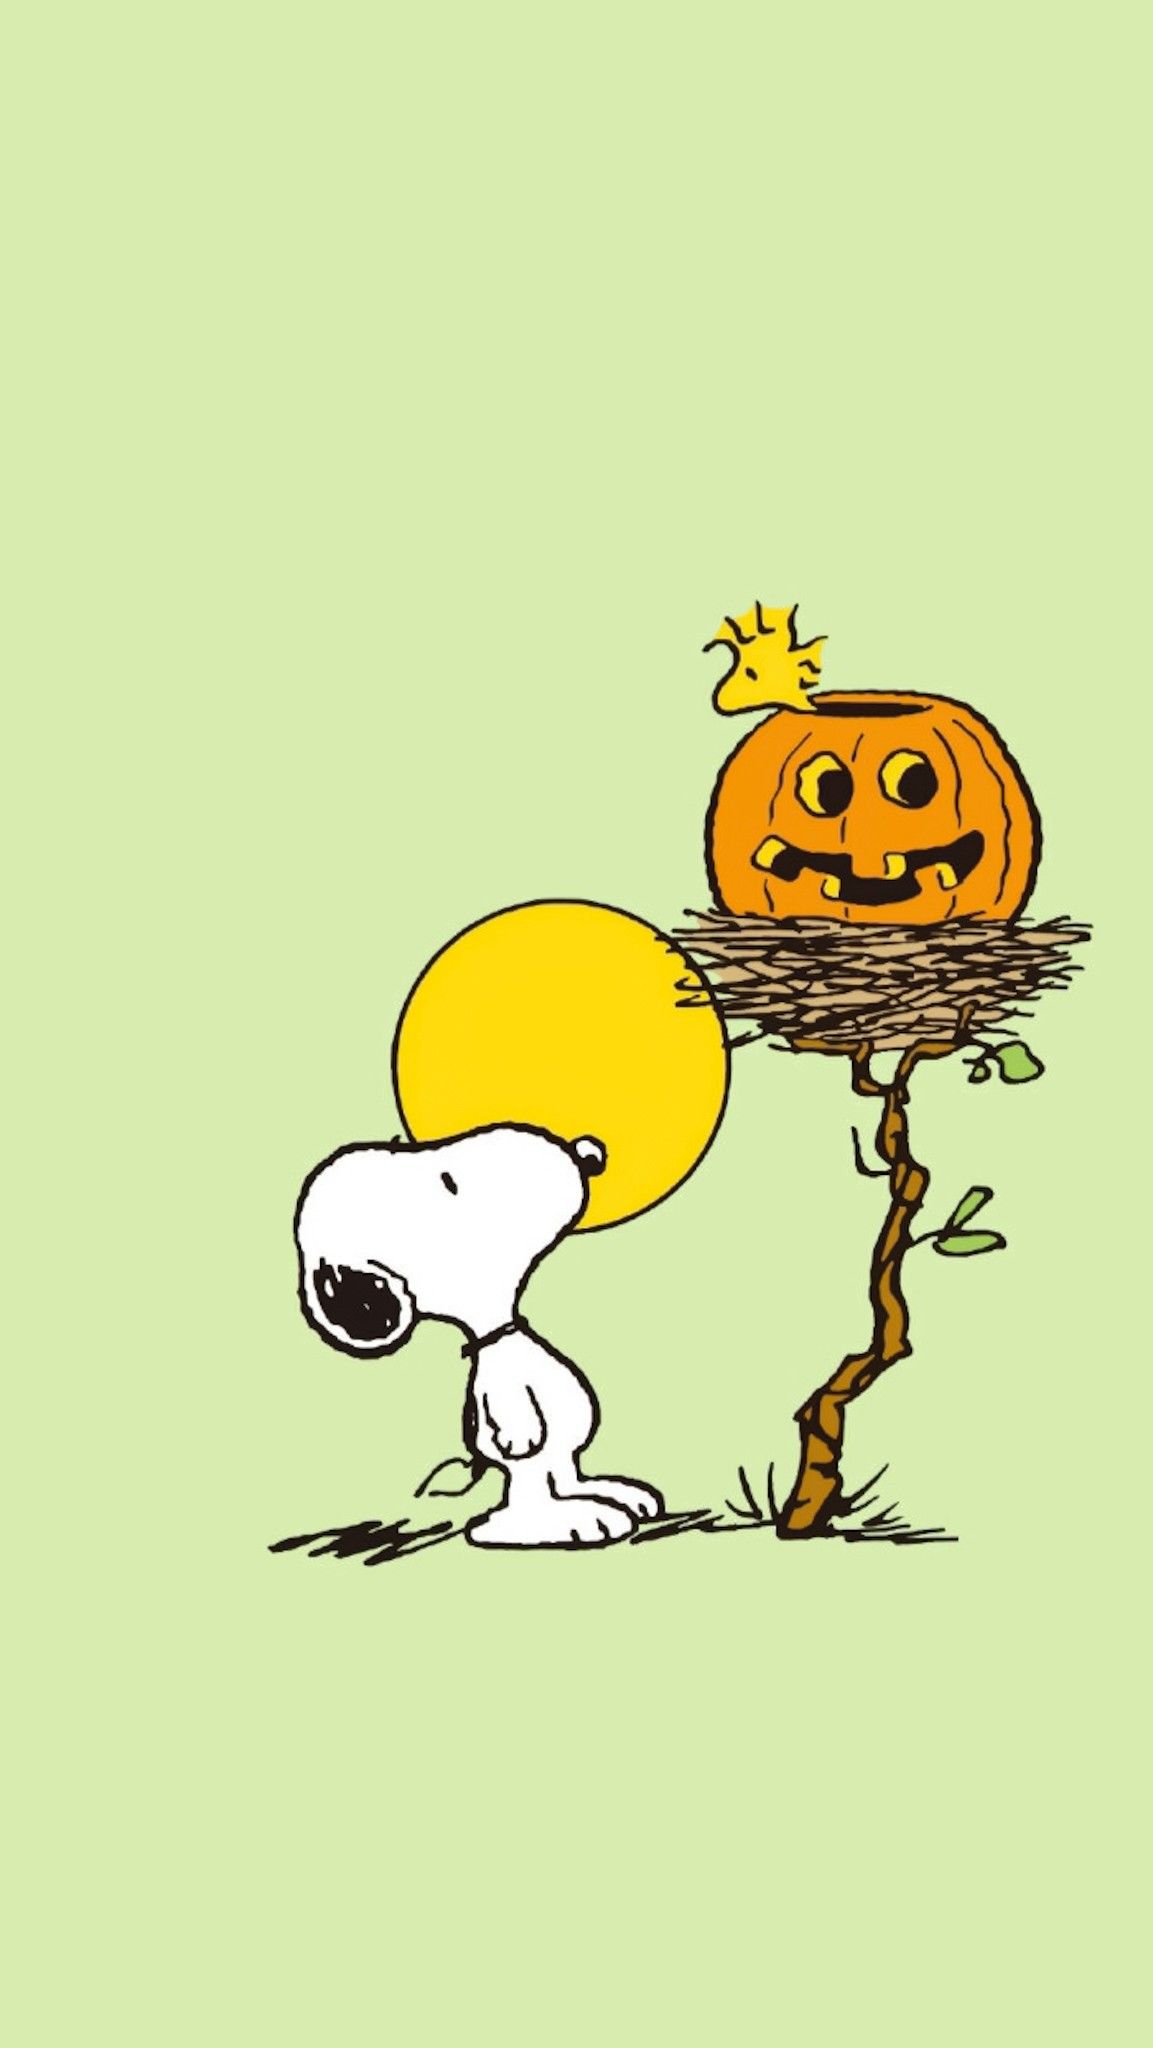 Charlie Brown Halloween Wallpaper 61 images